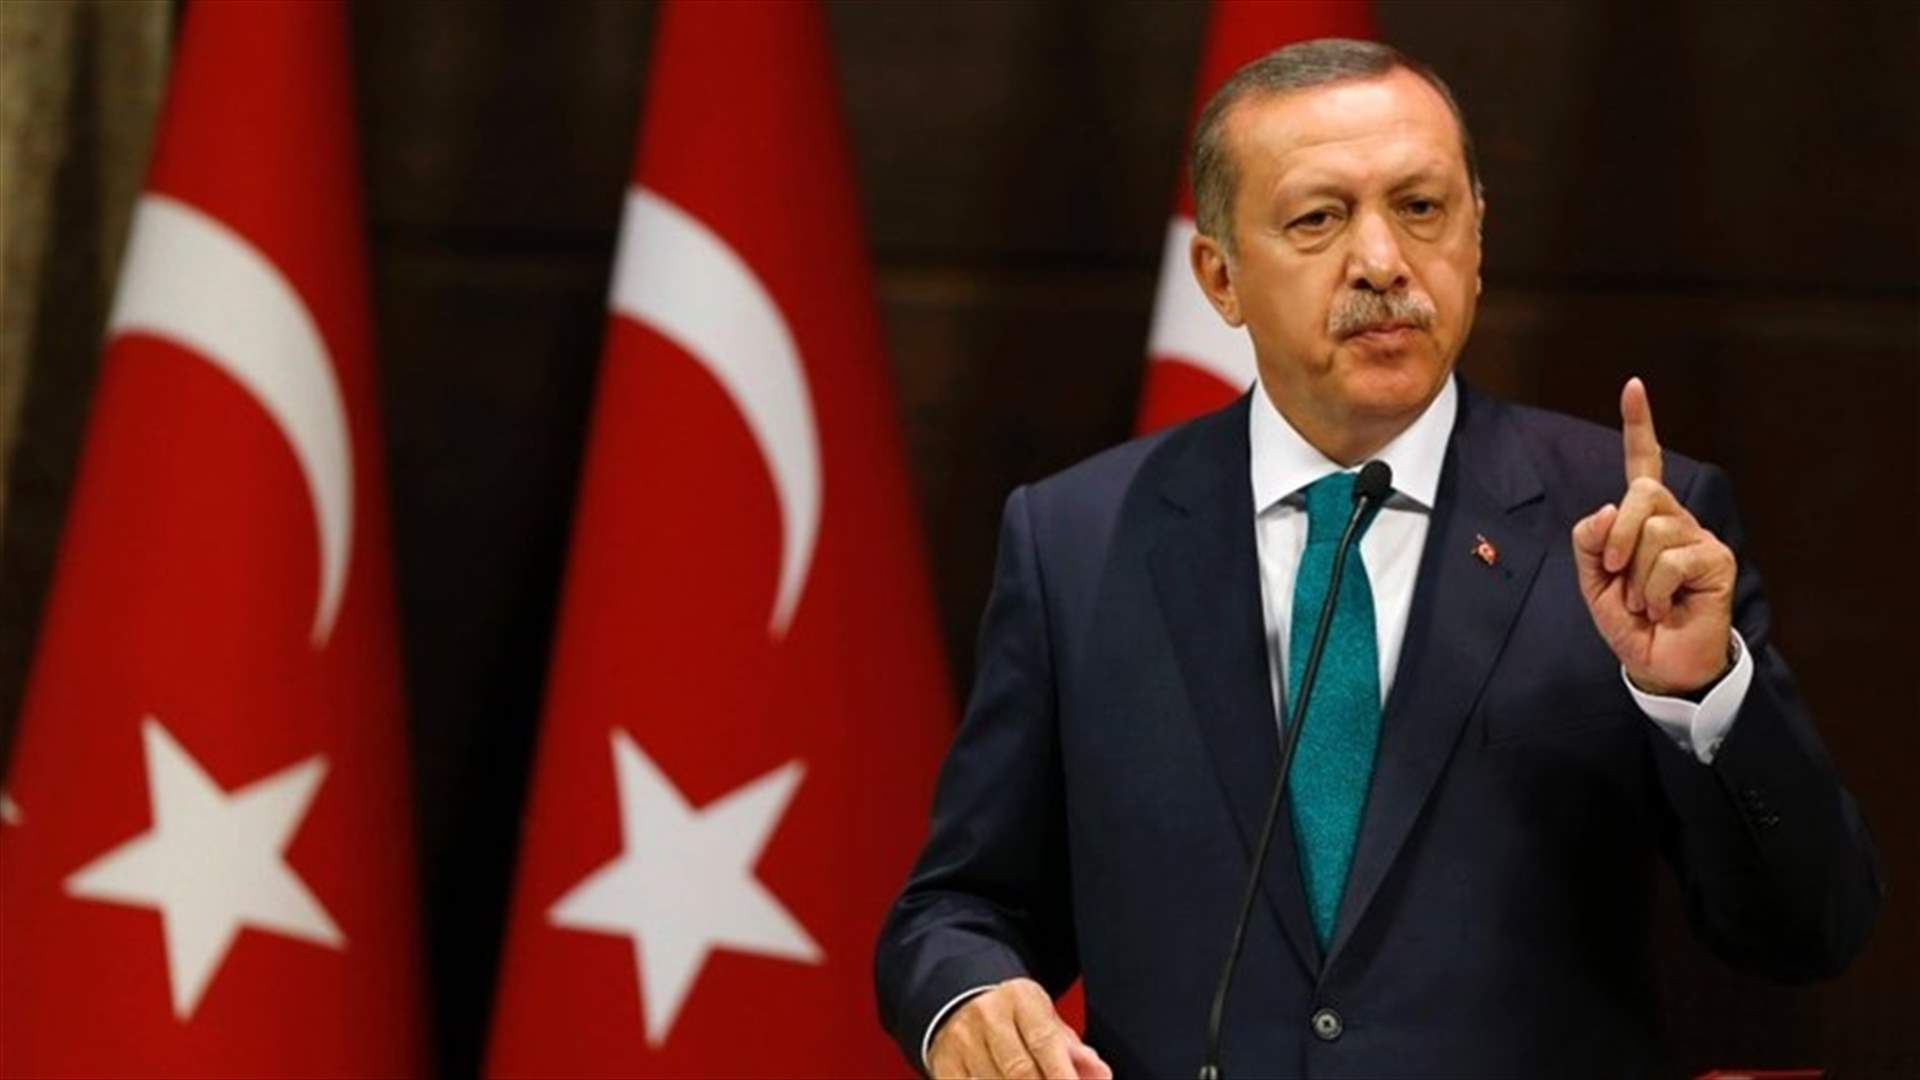 Erdogan warns Europeans &quot;will not walk safely&quot; if current attitude persists